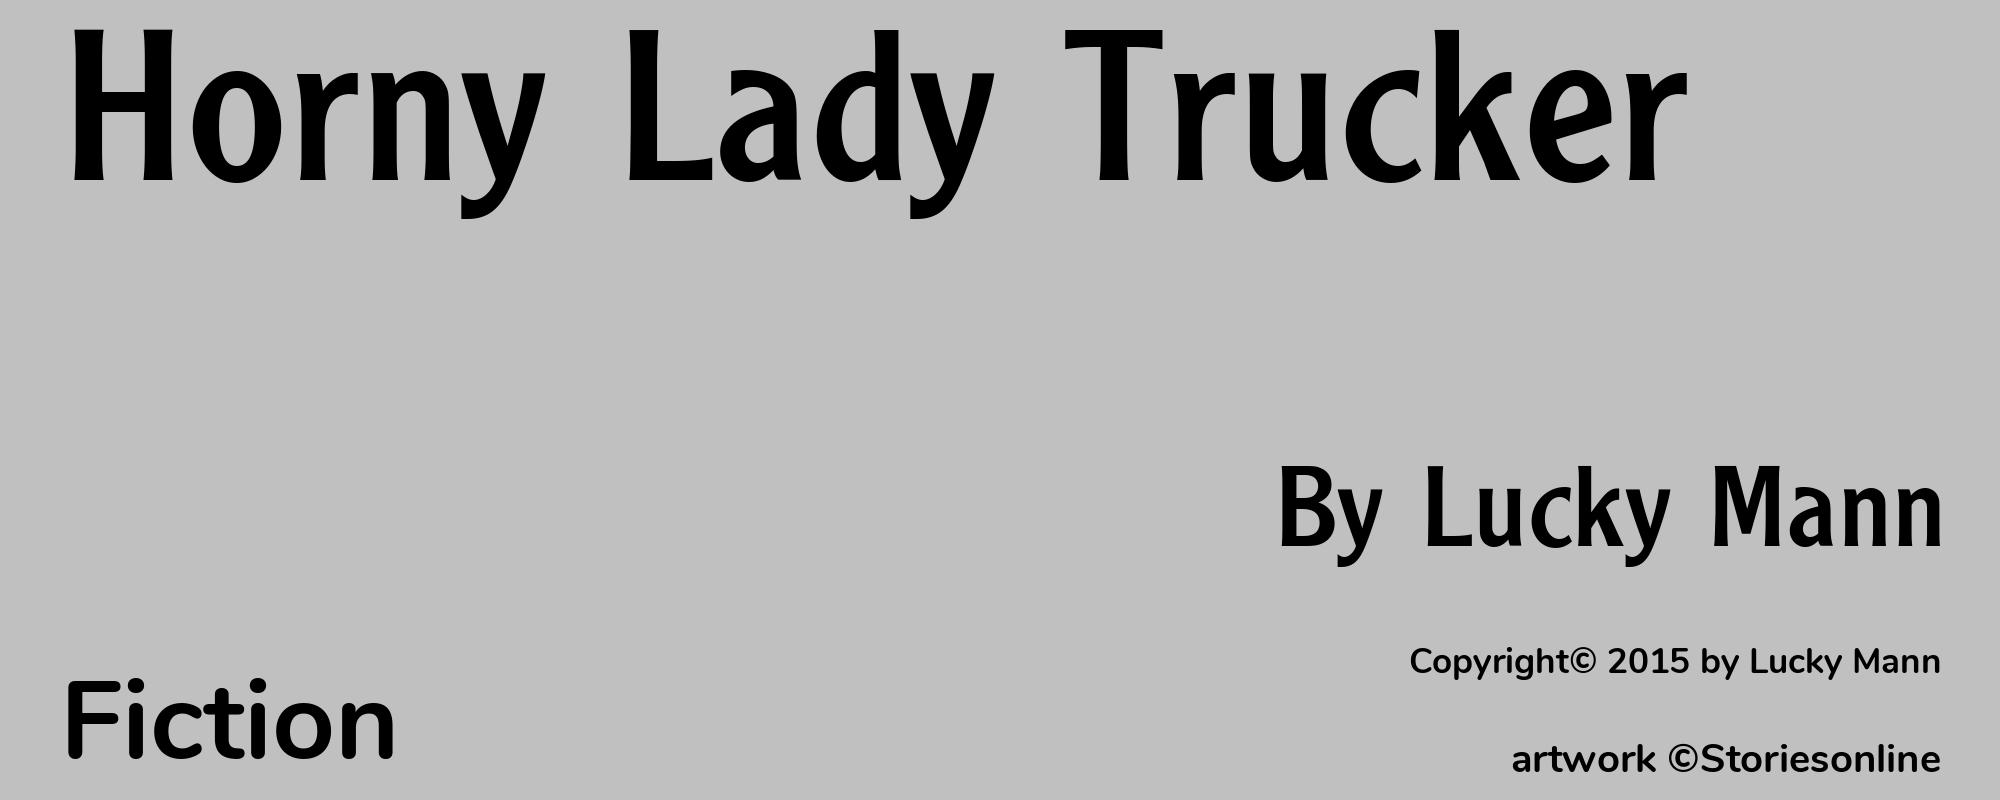 Horny Lady Trucker - Cover